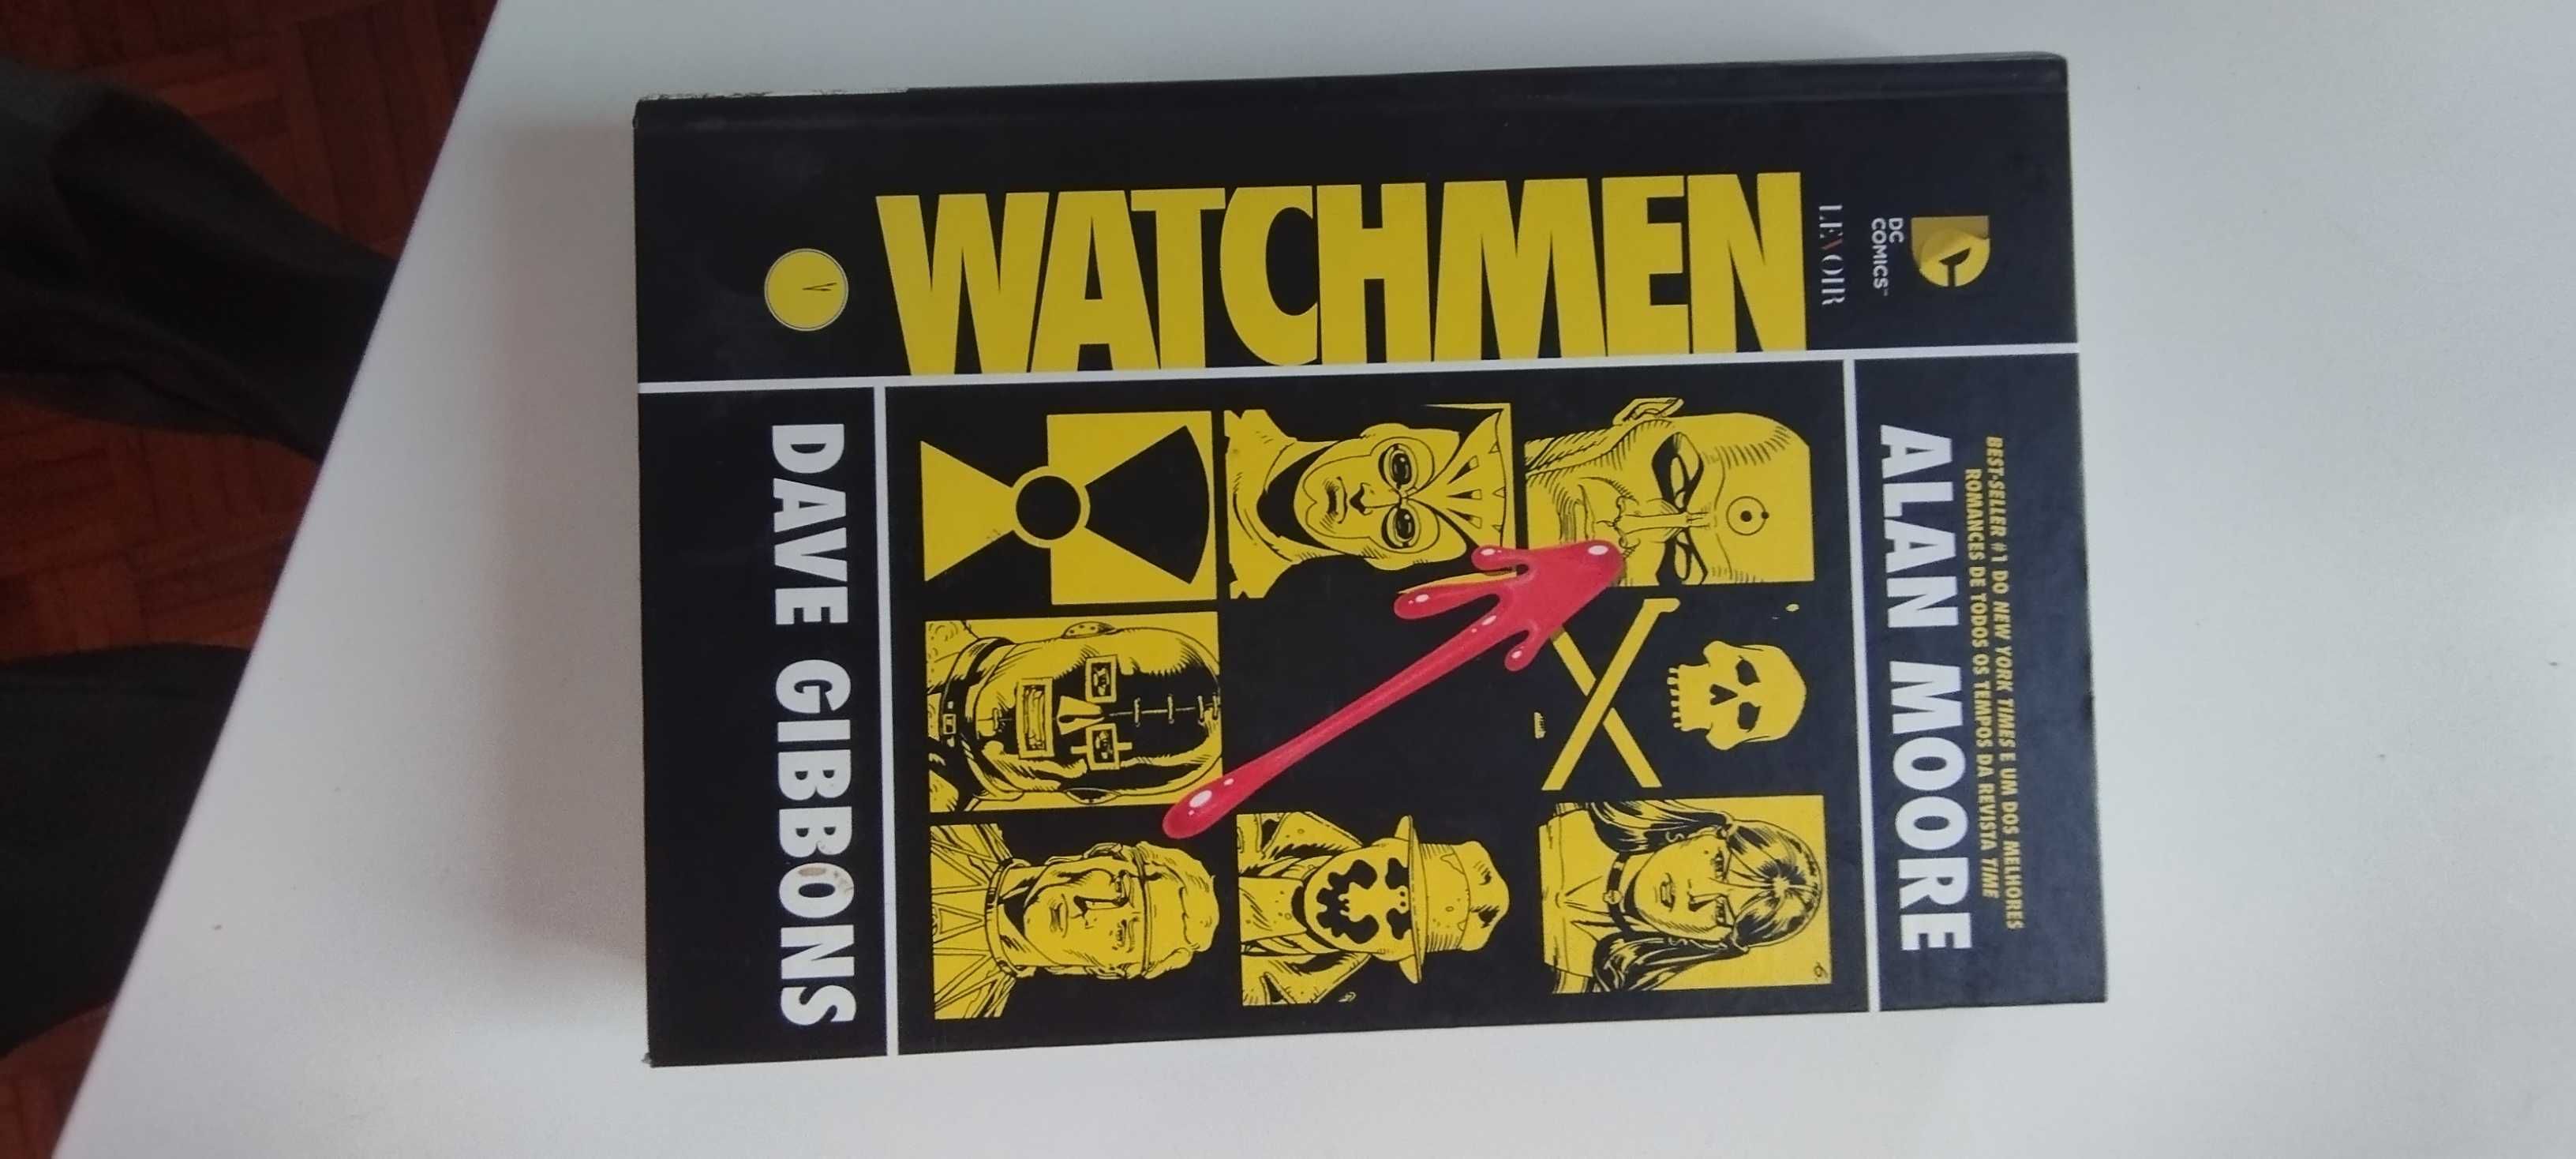 Livro Watchmen capa dura brochura